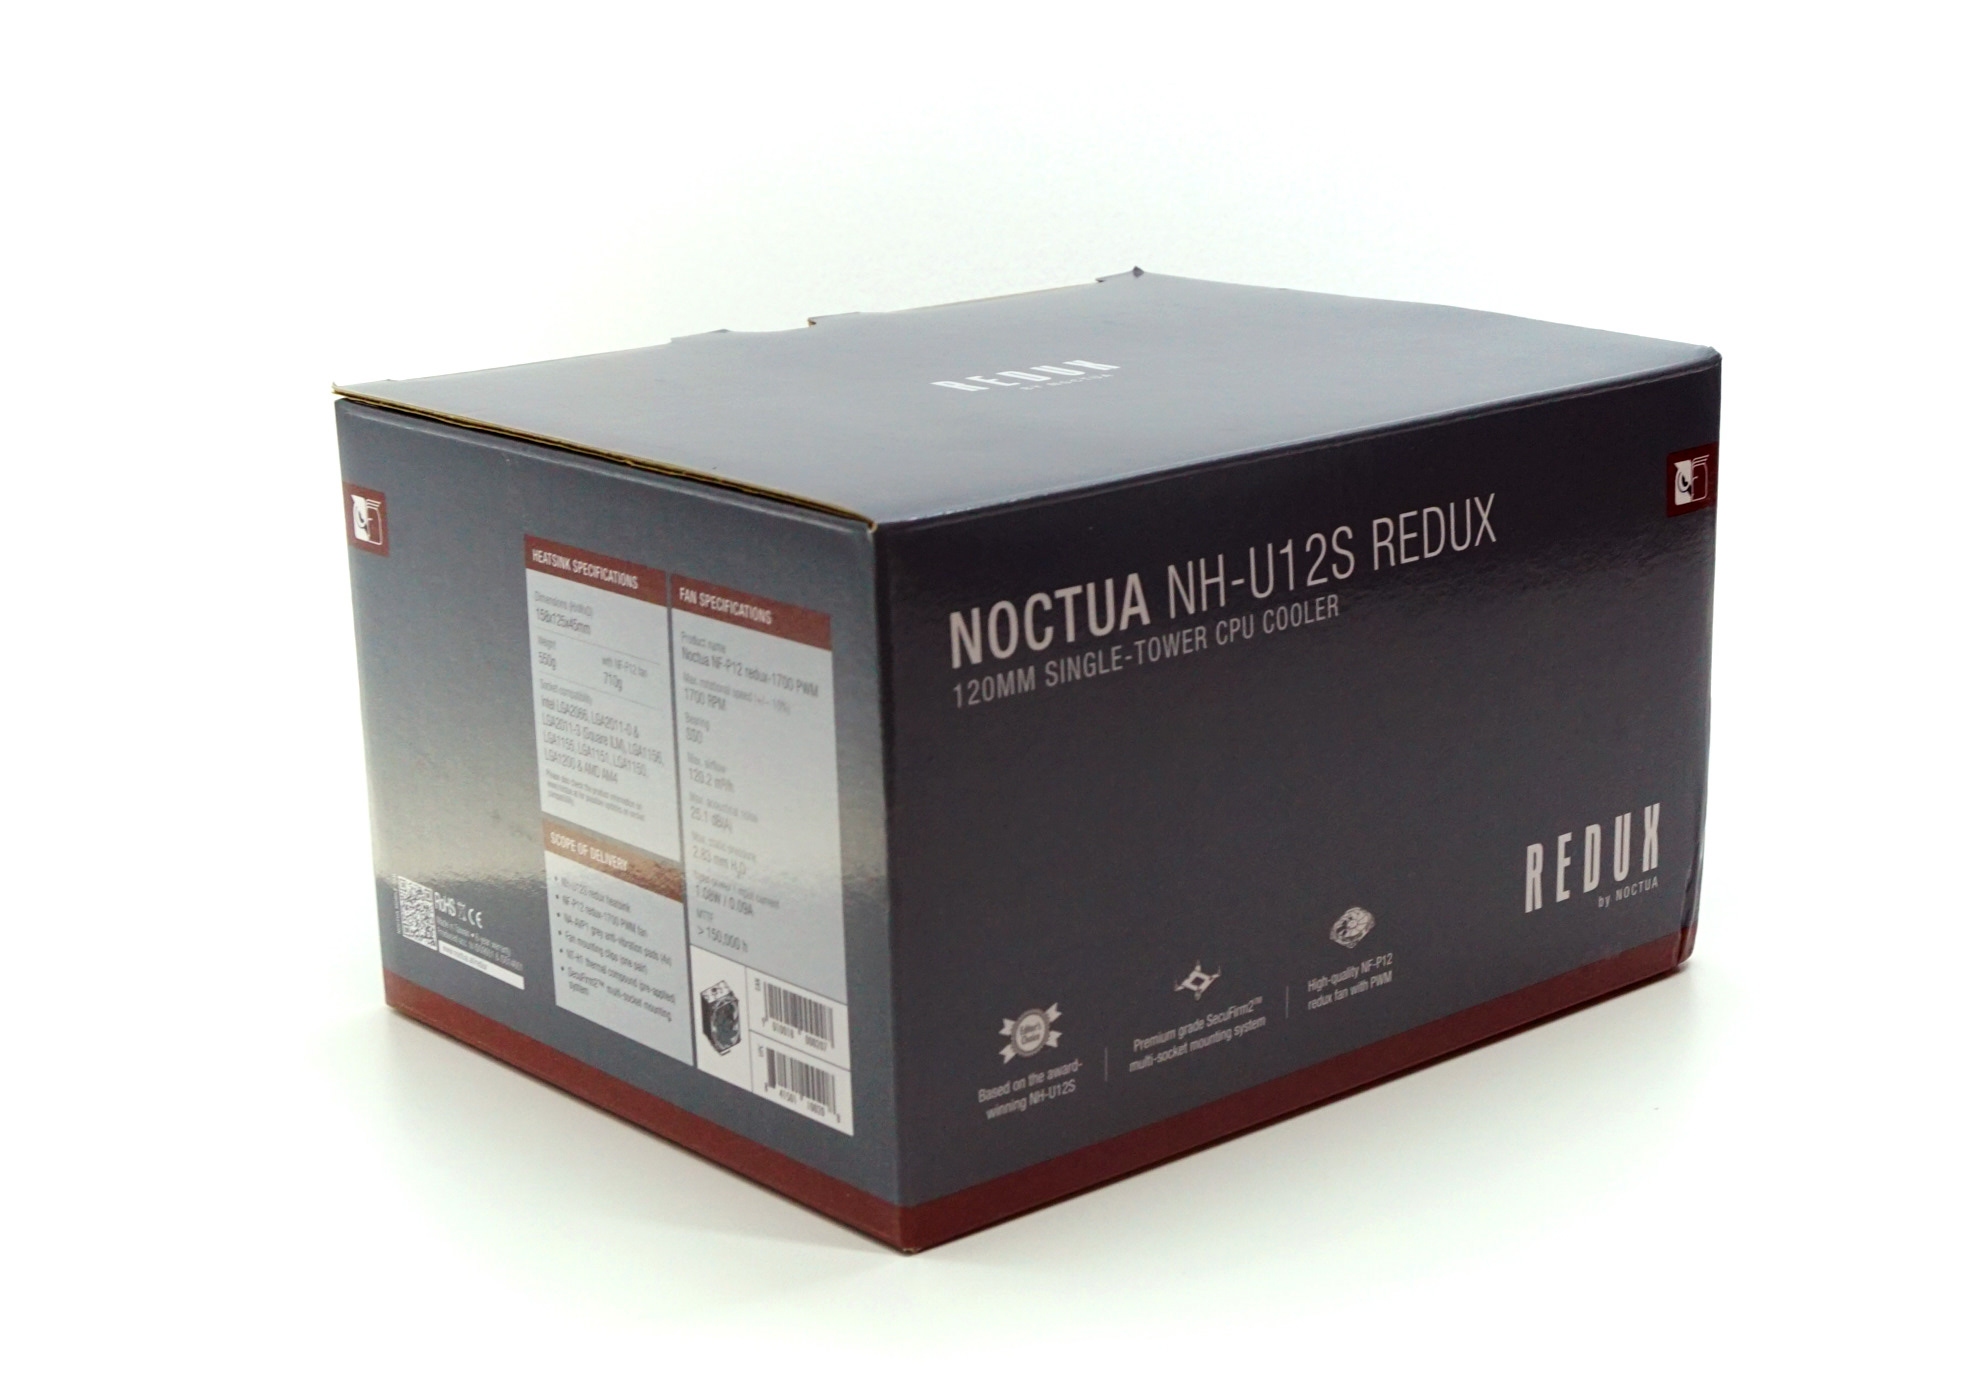 ANOTHER Noctua Win - NH-U12S REDUX CPU Cooler Review